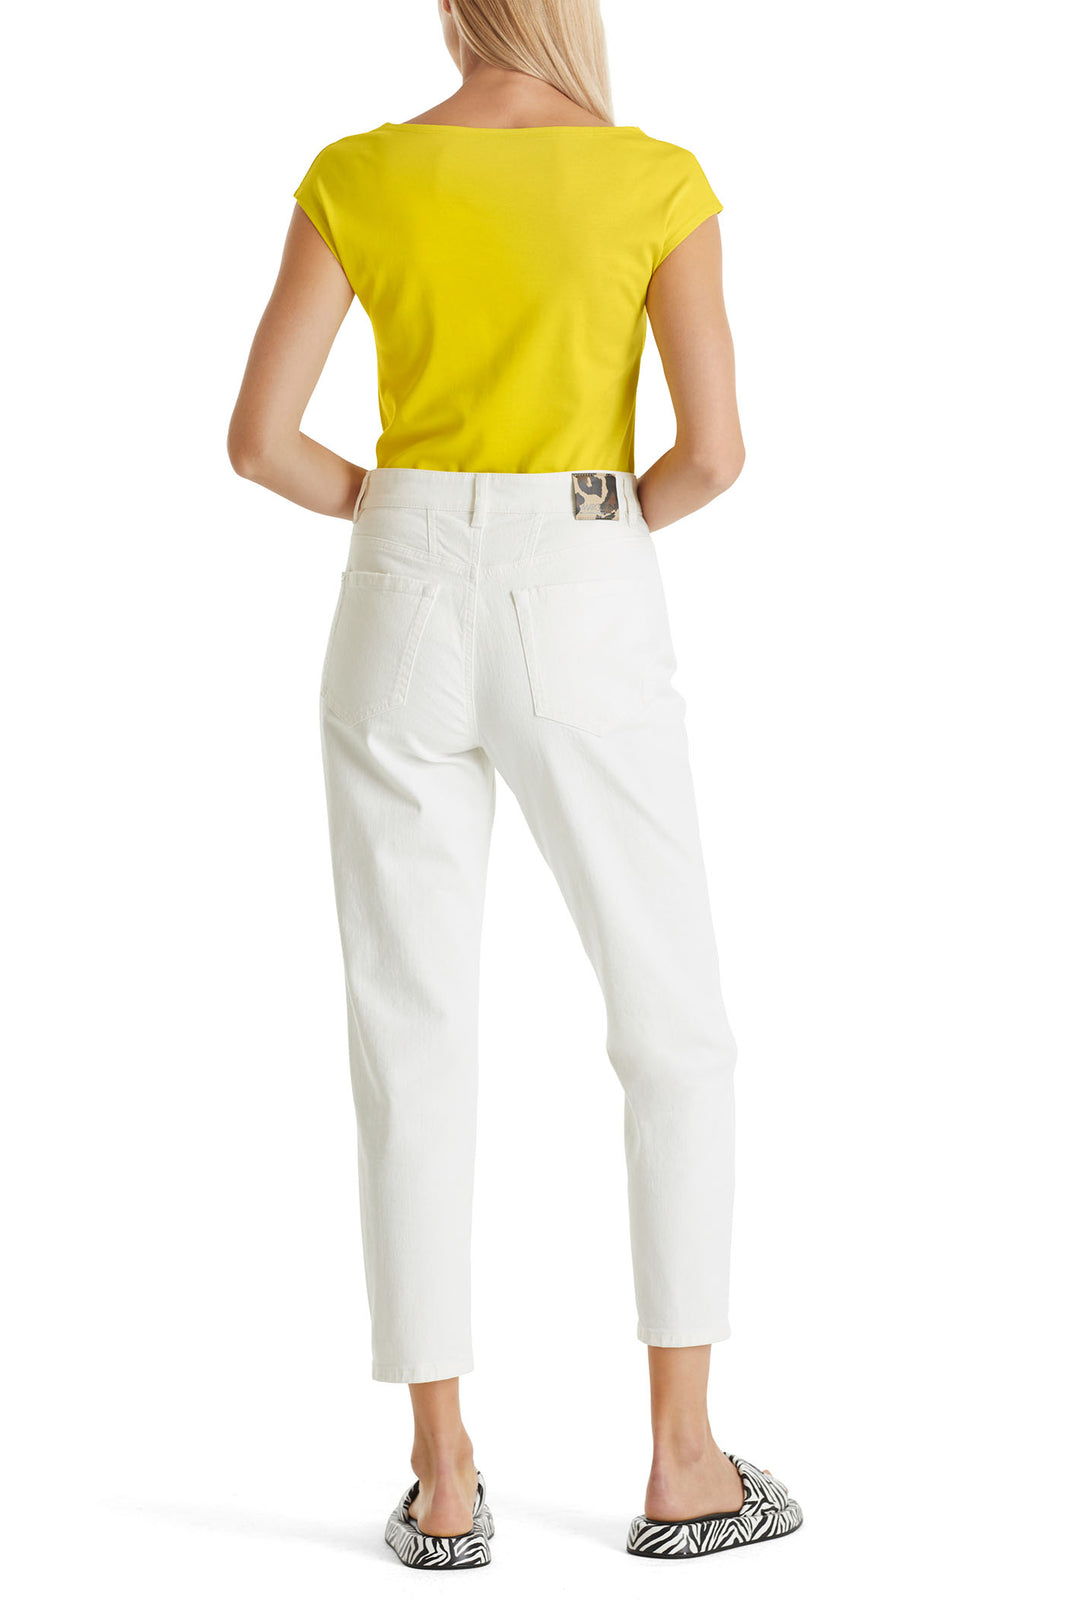 Marc Cain Additions WA 48.37 J14 431 Bright Sulphur Yellow Top - Olivia Grace Fashion